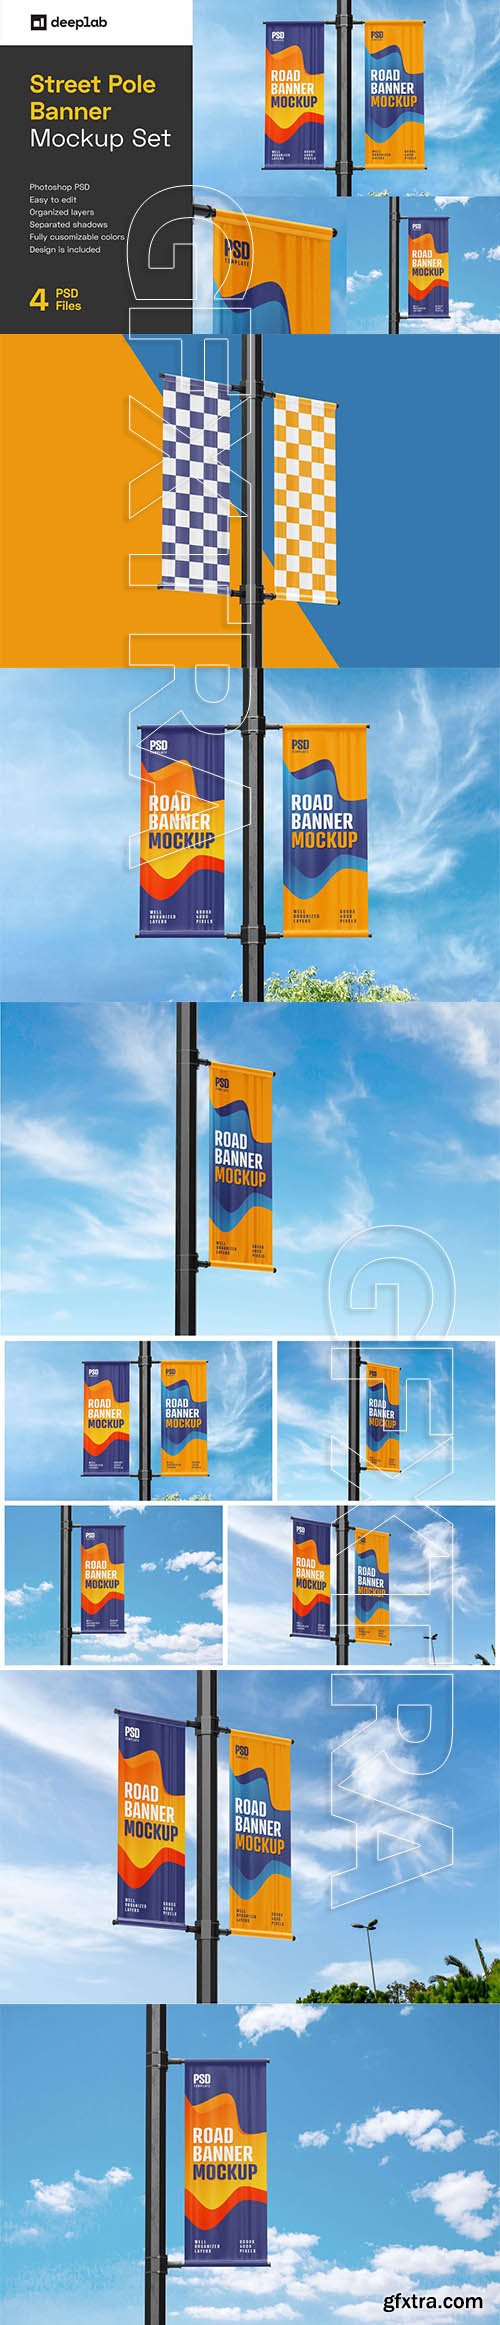 CreativeMarket - Street Pole Banner Mockup Set 5920829